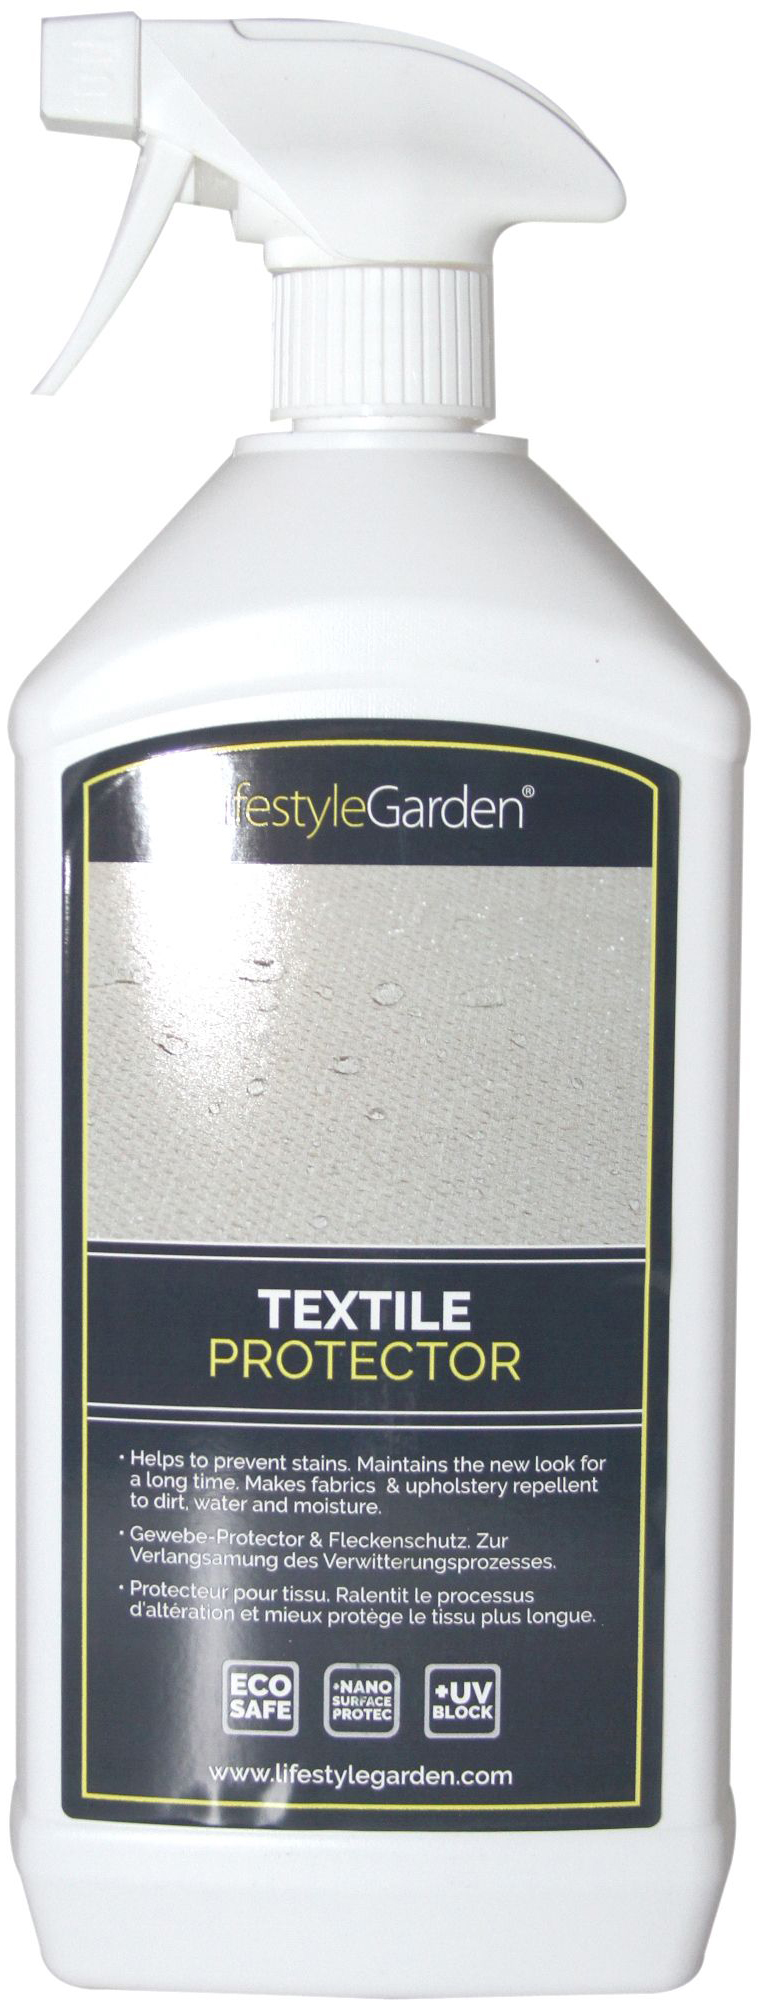 LifestyleGarden Textile Protector - 1 Litre